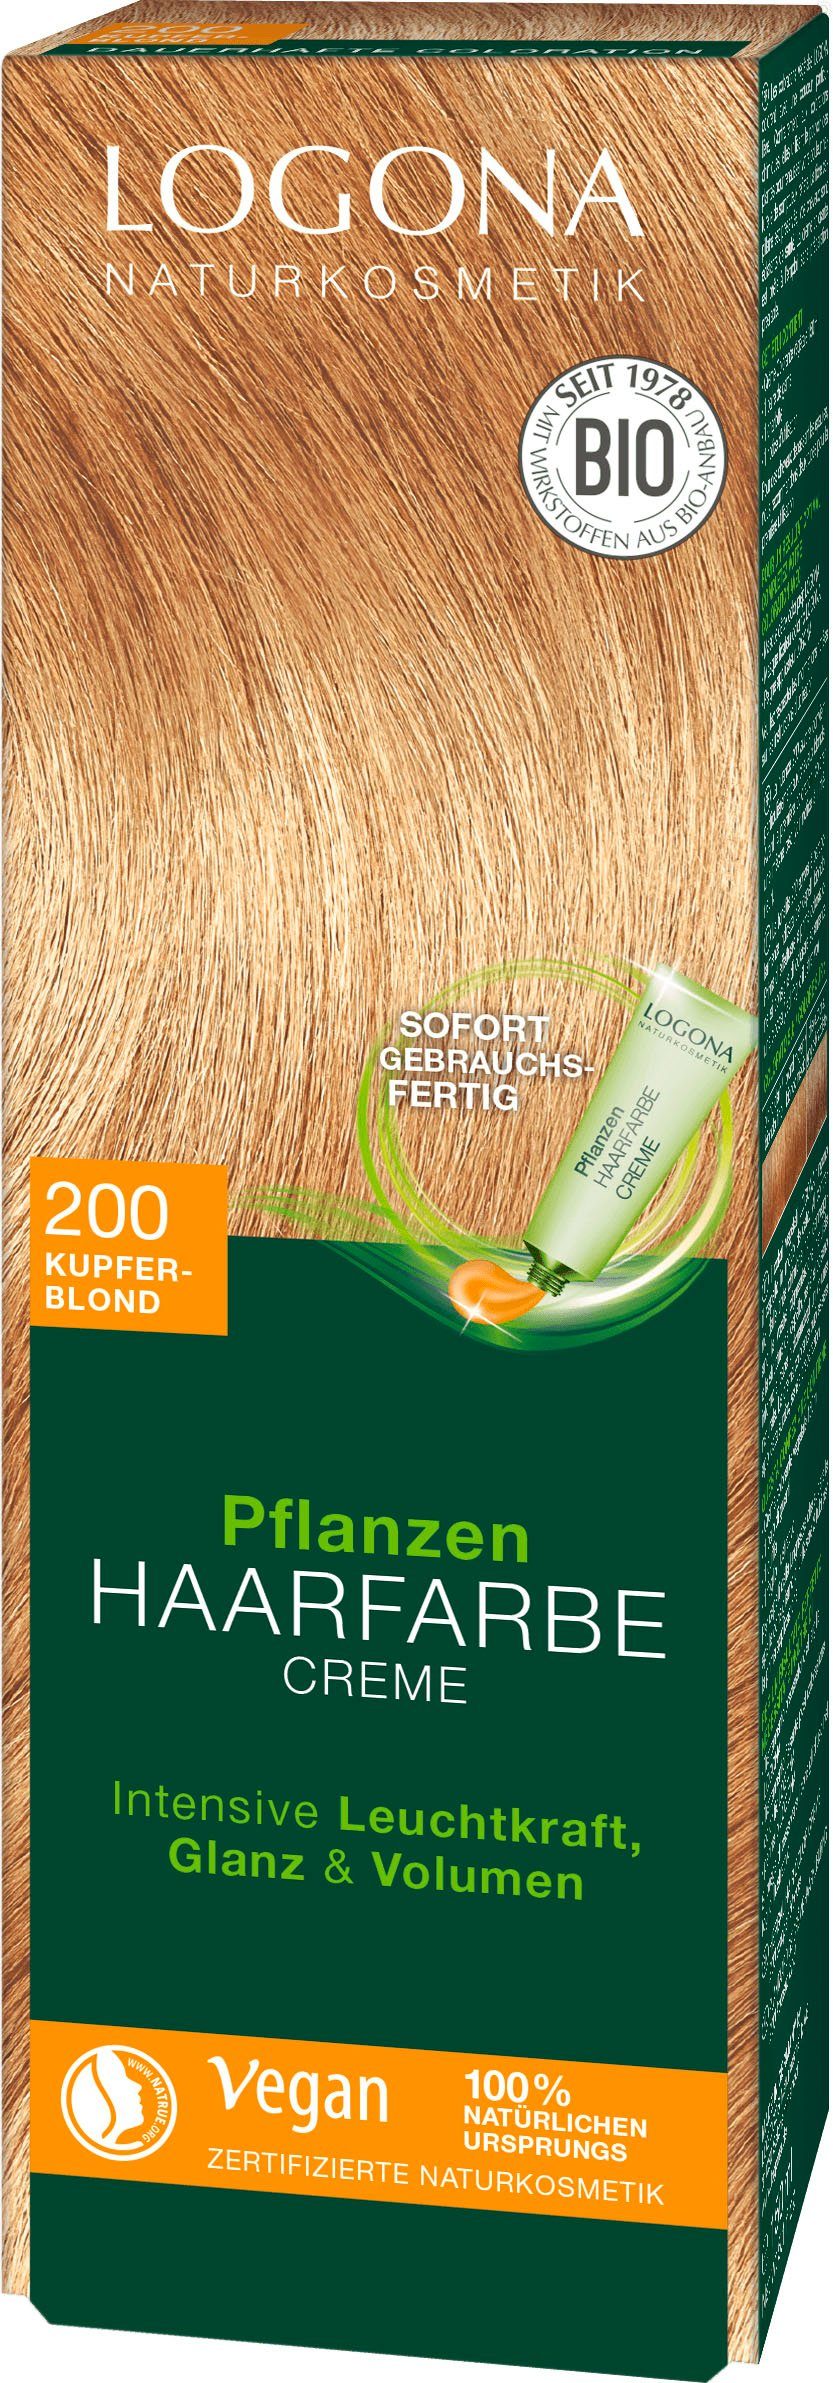 LOGONA Pflanzen-Haarfarbe Haarfarbe Creme Logona